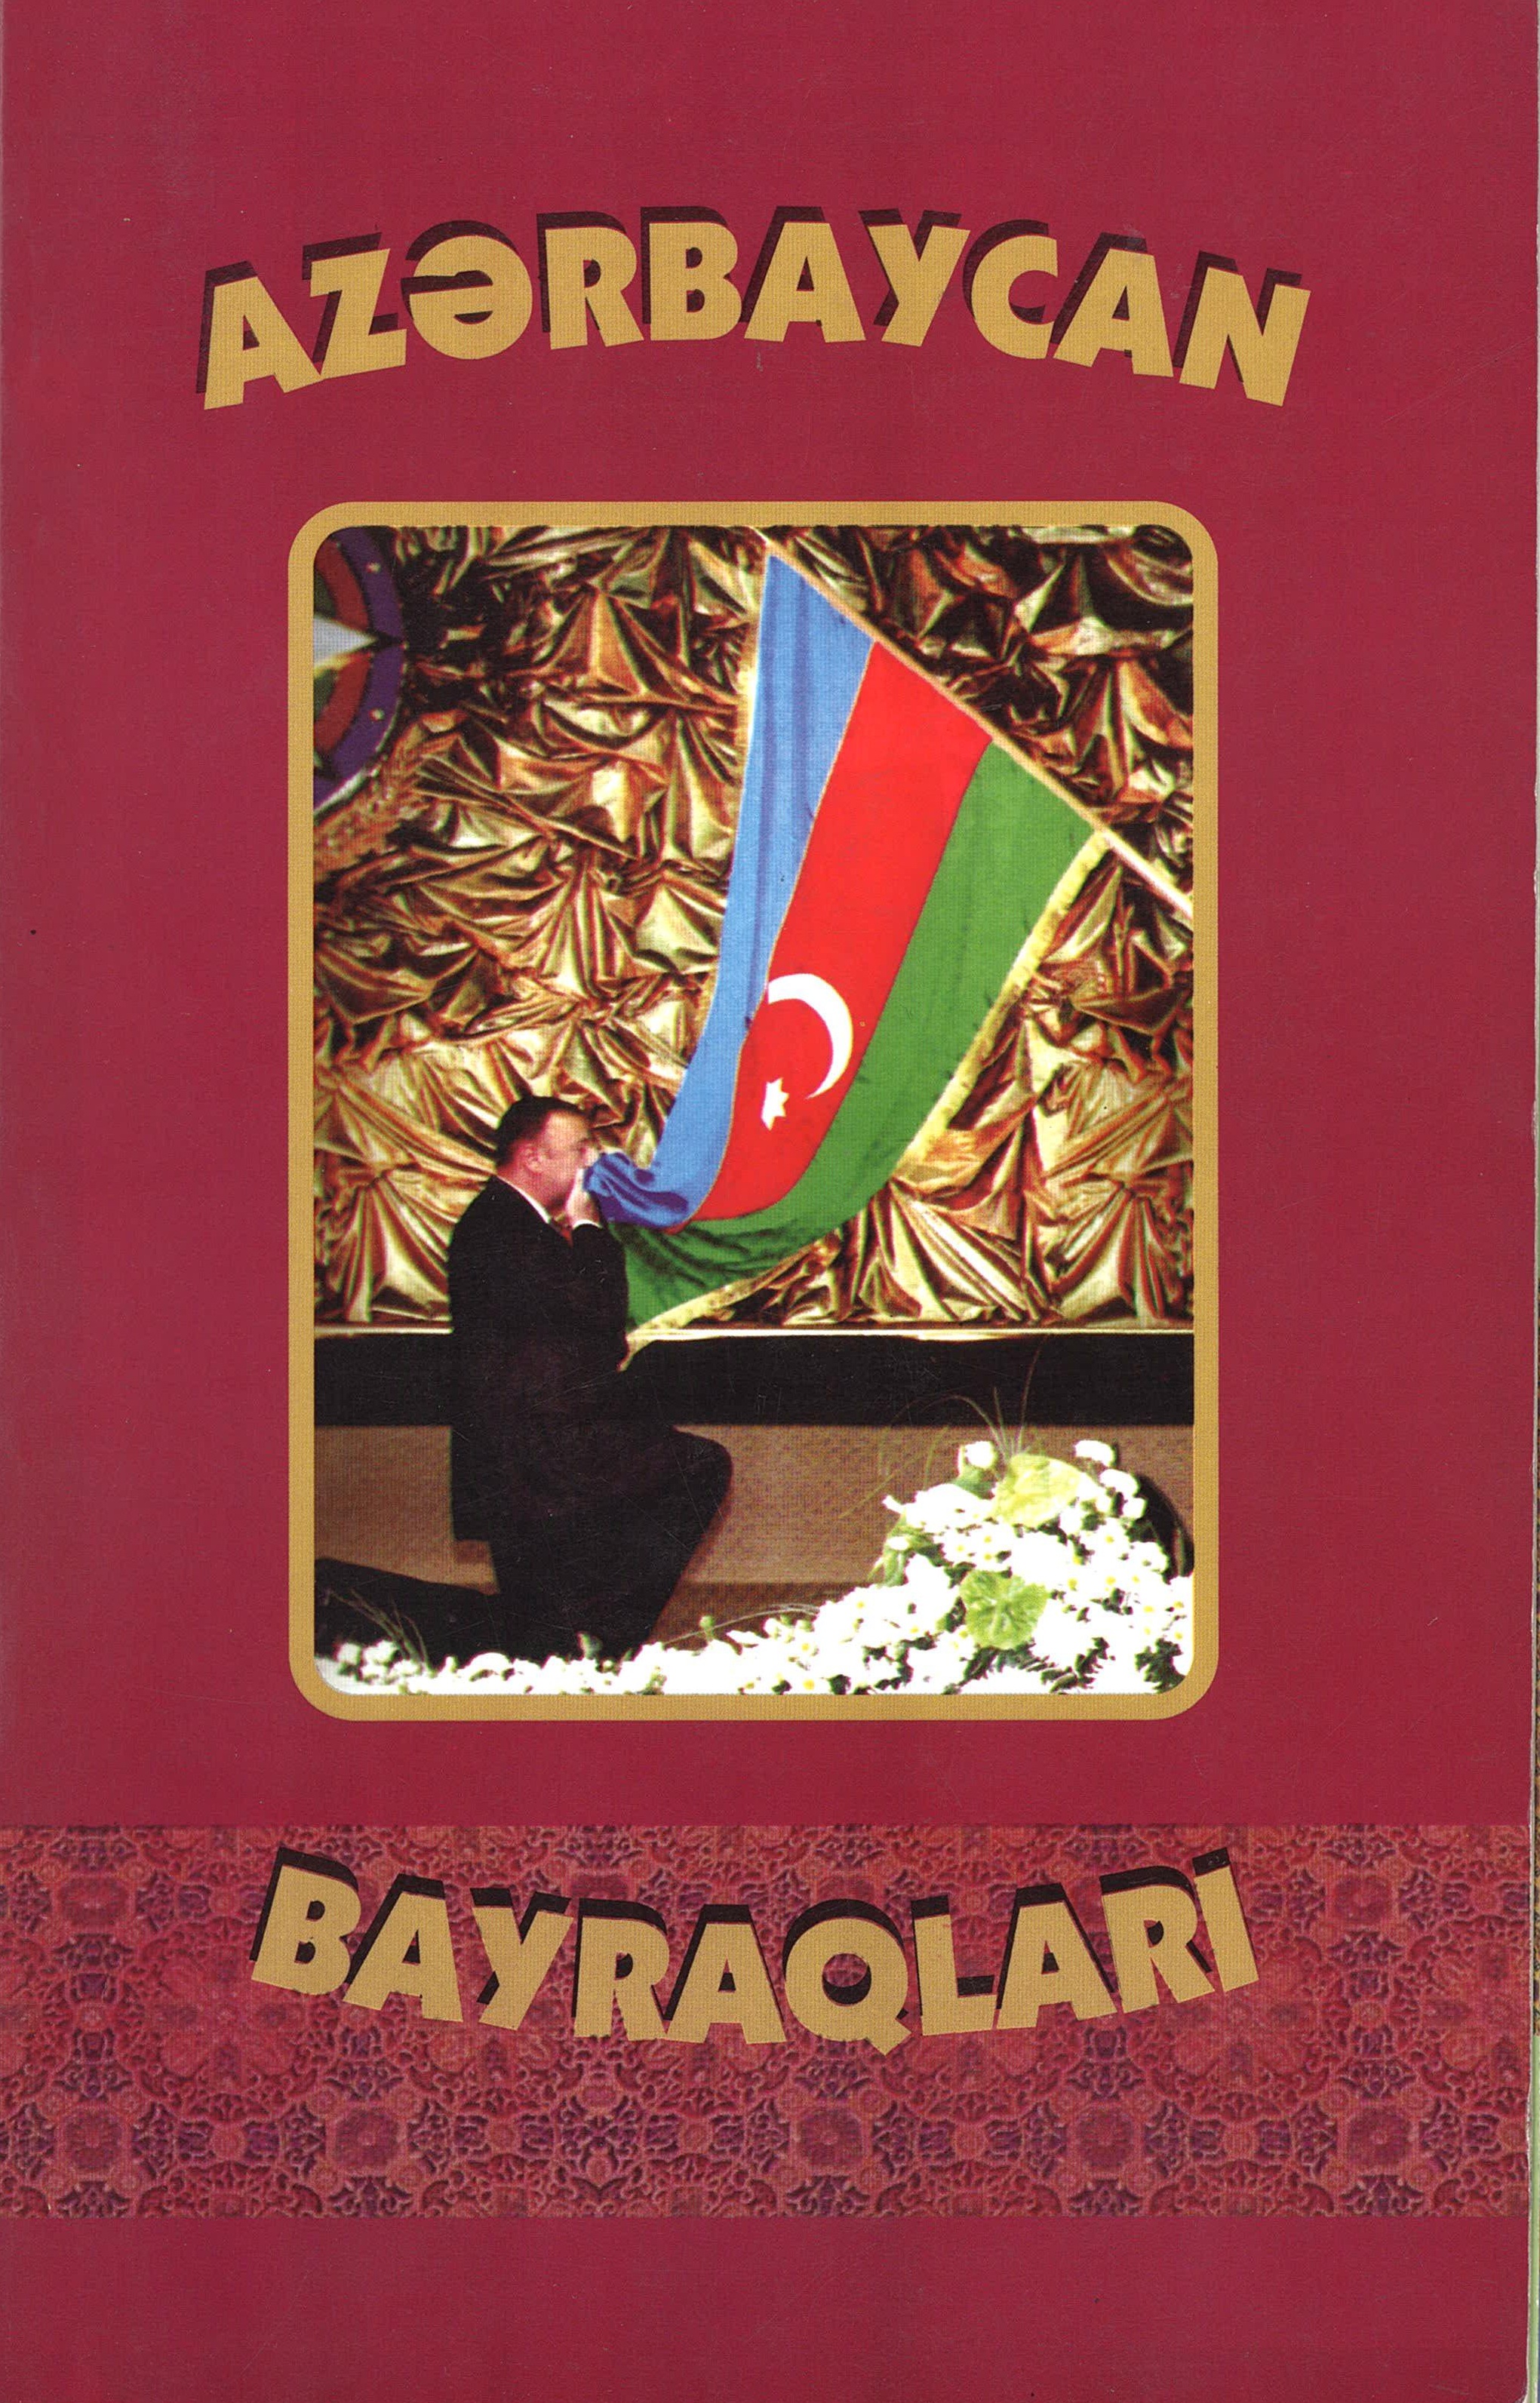  Flags of Azerbaijan